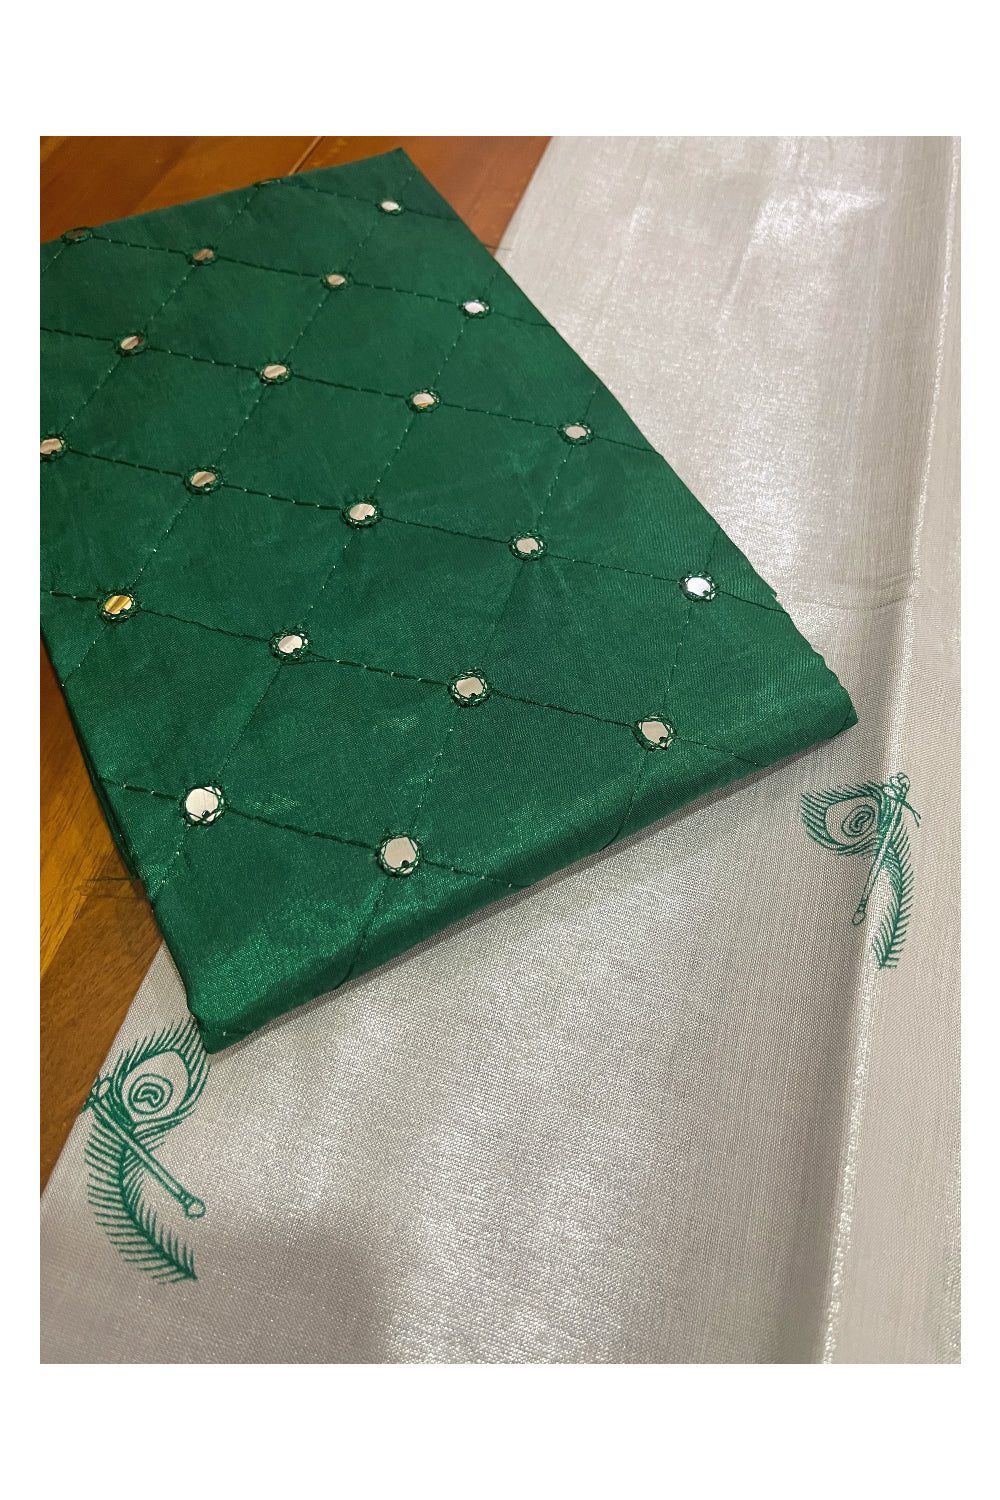 Kerala Silver Tissue Block Printed Pavada and Green Designer Blouse Material for Kids/Girls 4.3 Meters